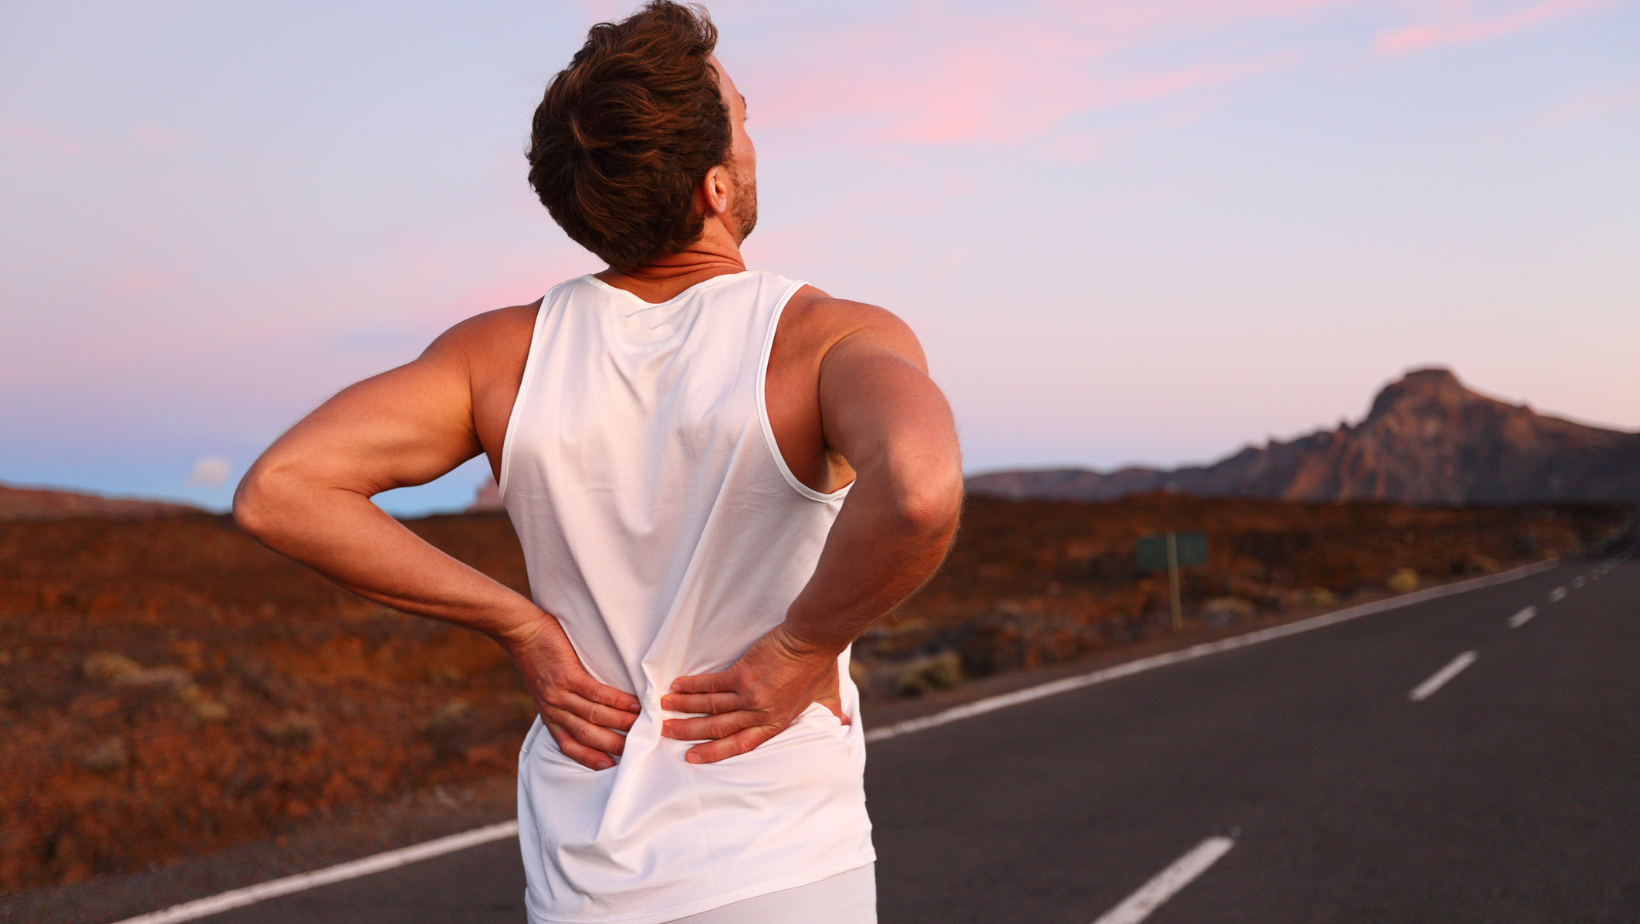 Men having back pain image